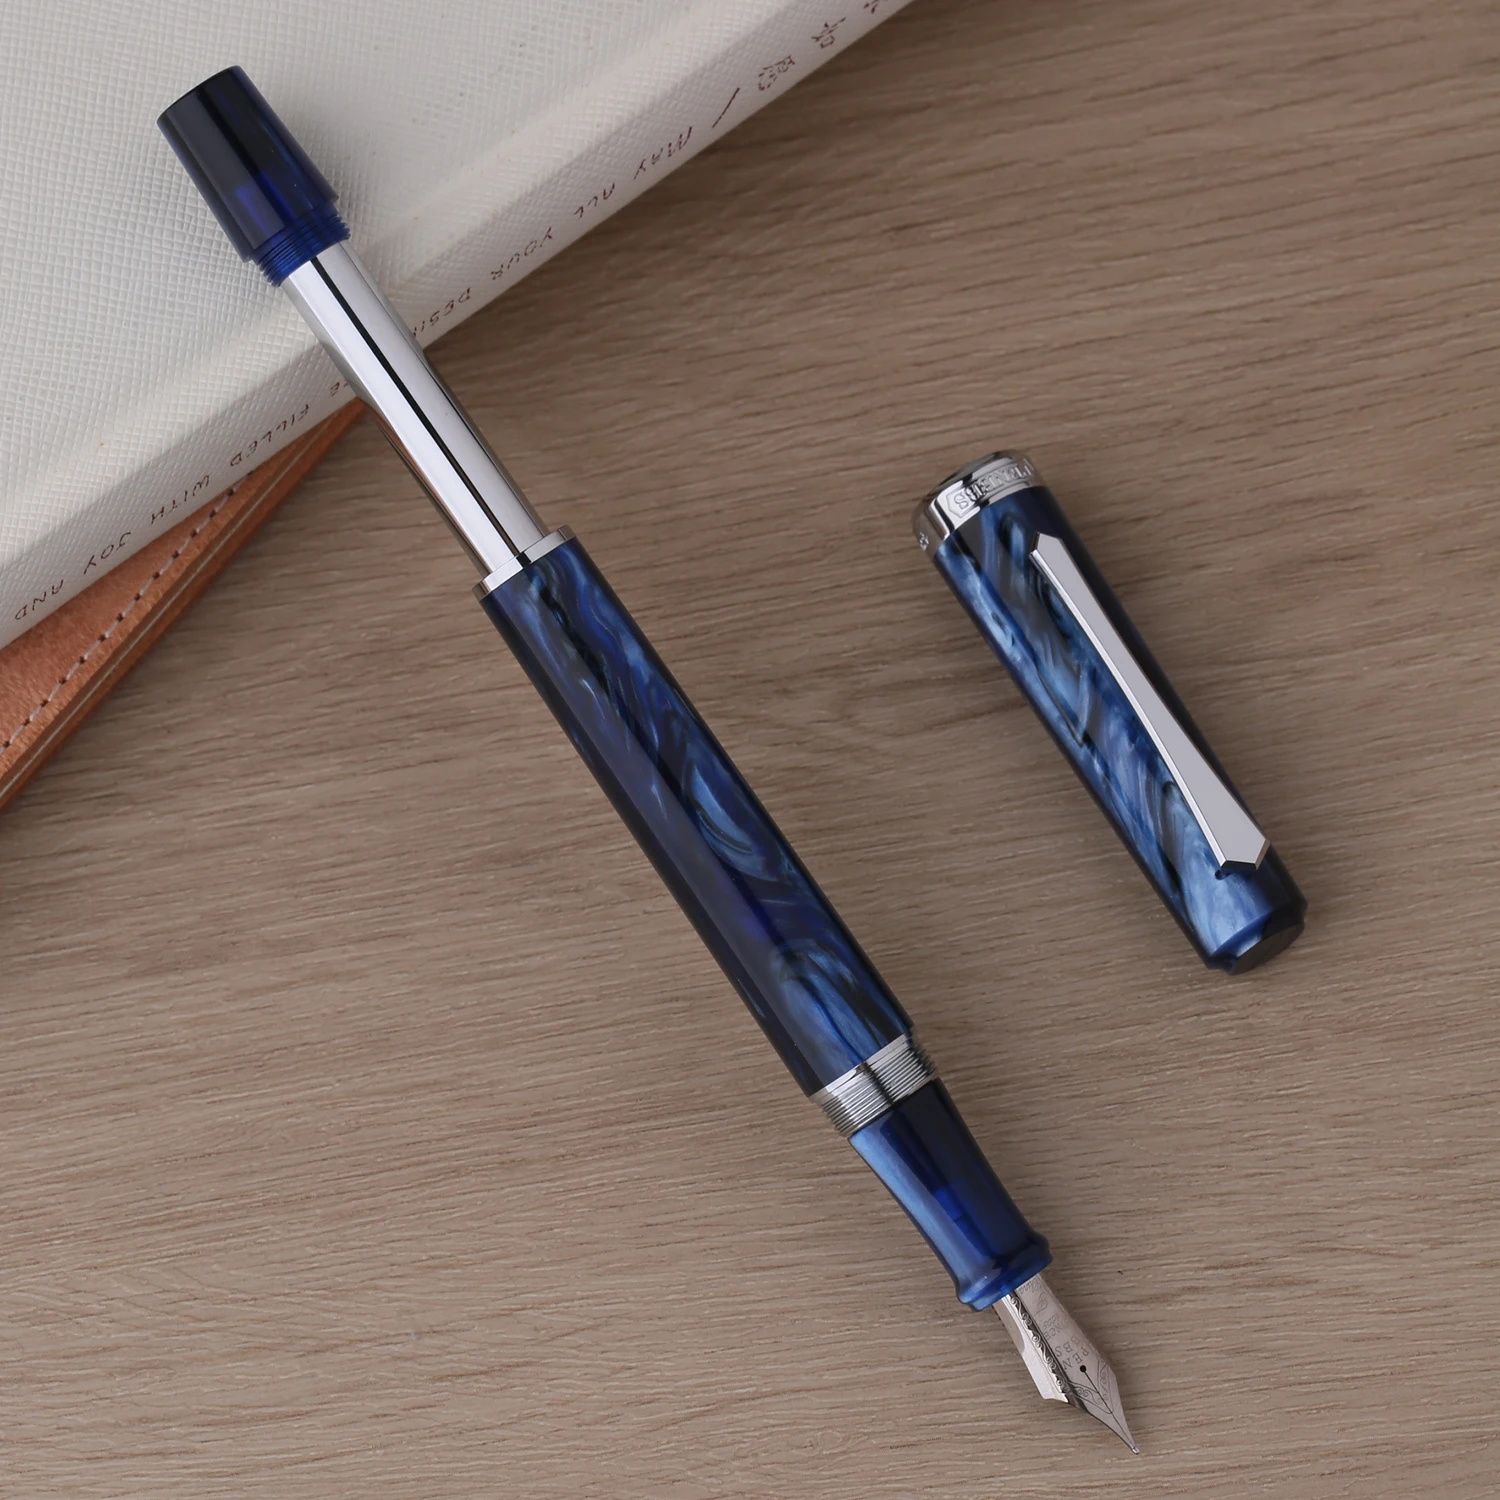 Penbbs 489 Touchdown Fountain Pen Fine Nib 0.5mm Beautiful Galaxy Acrylic Writing Gift Pen with Gfit Box for Business Office